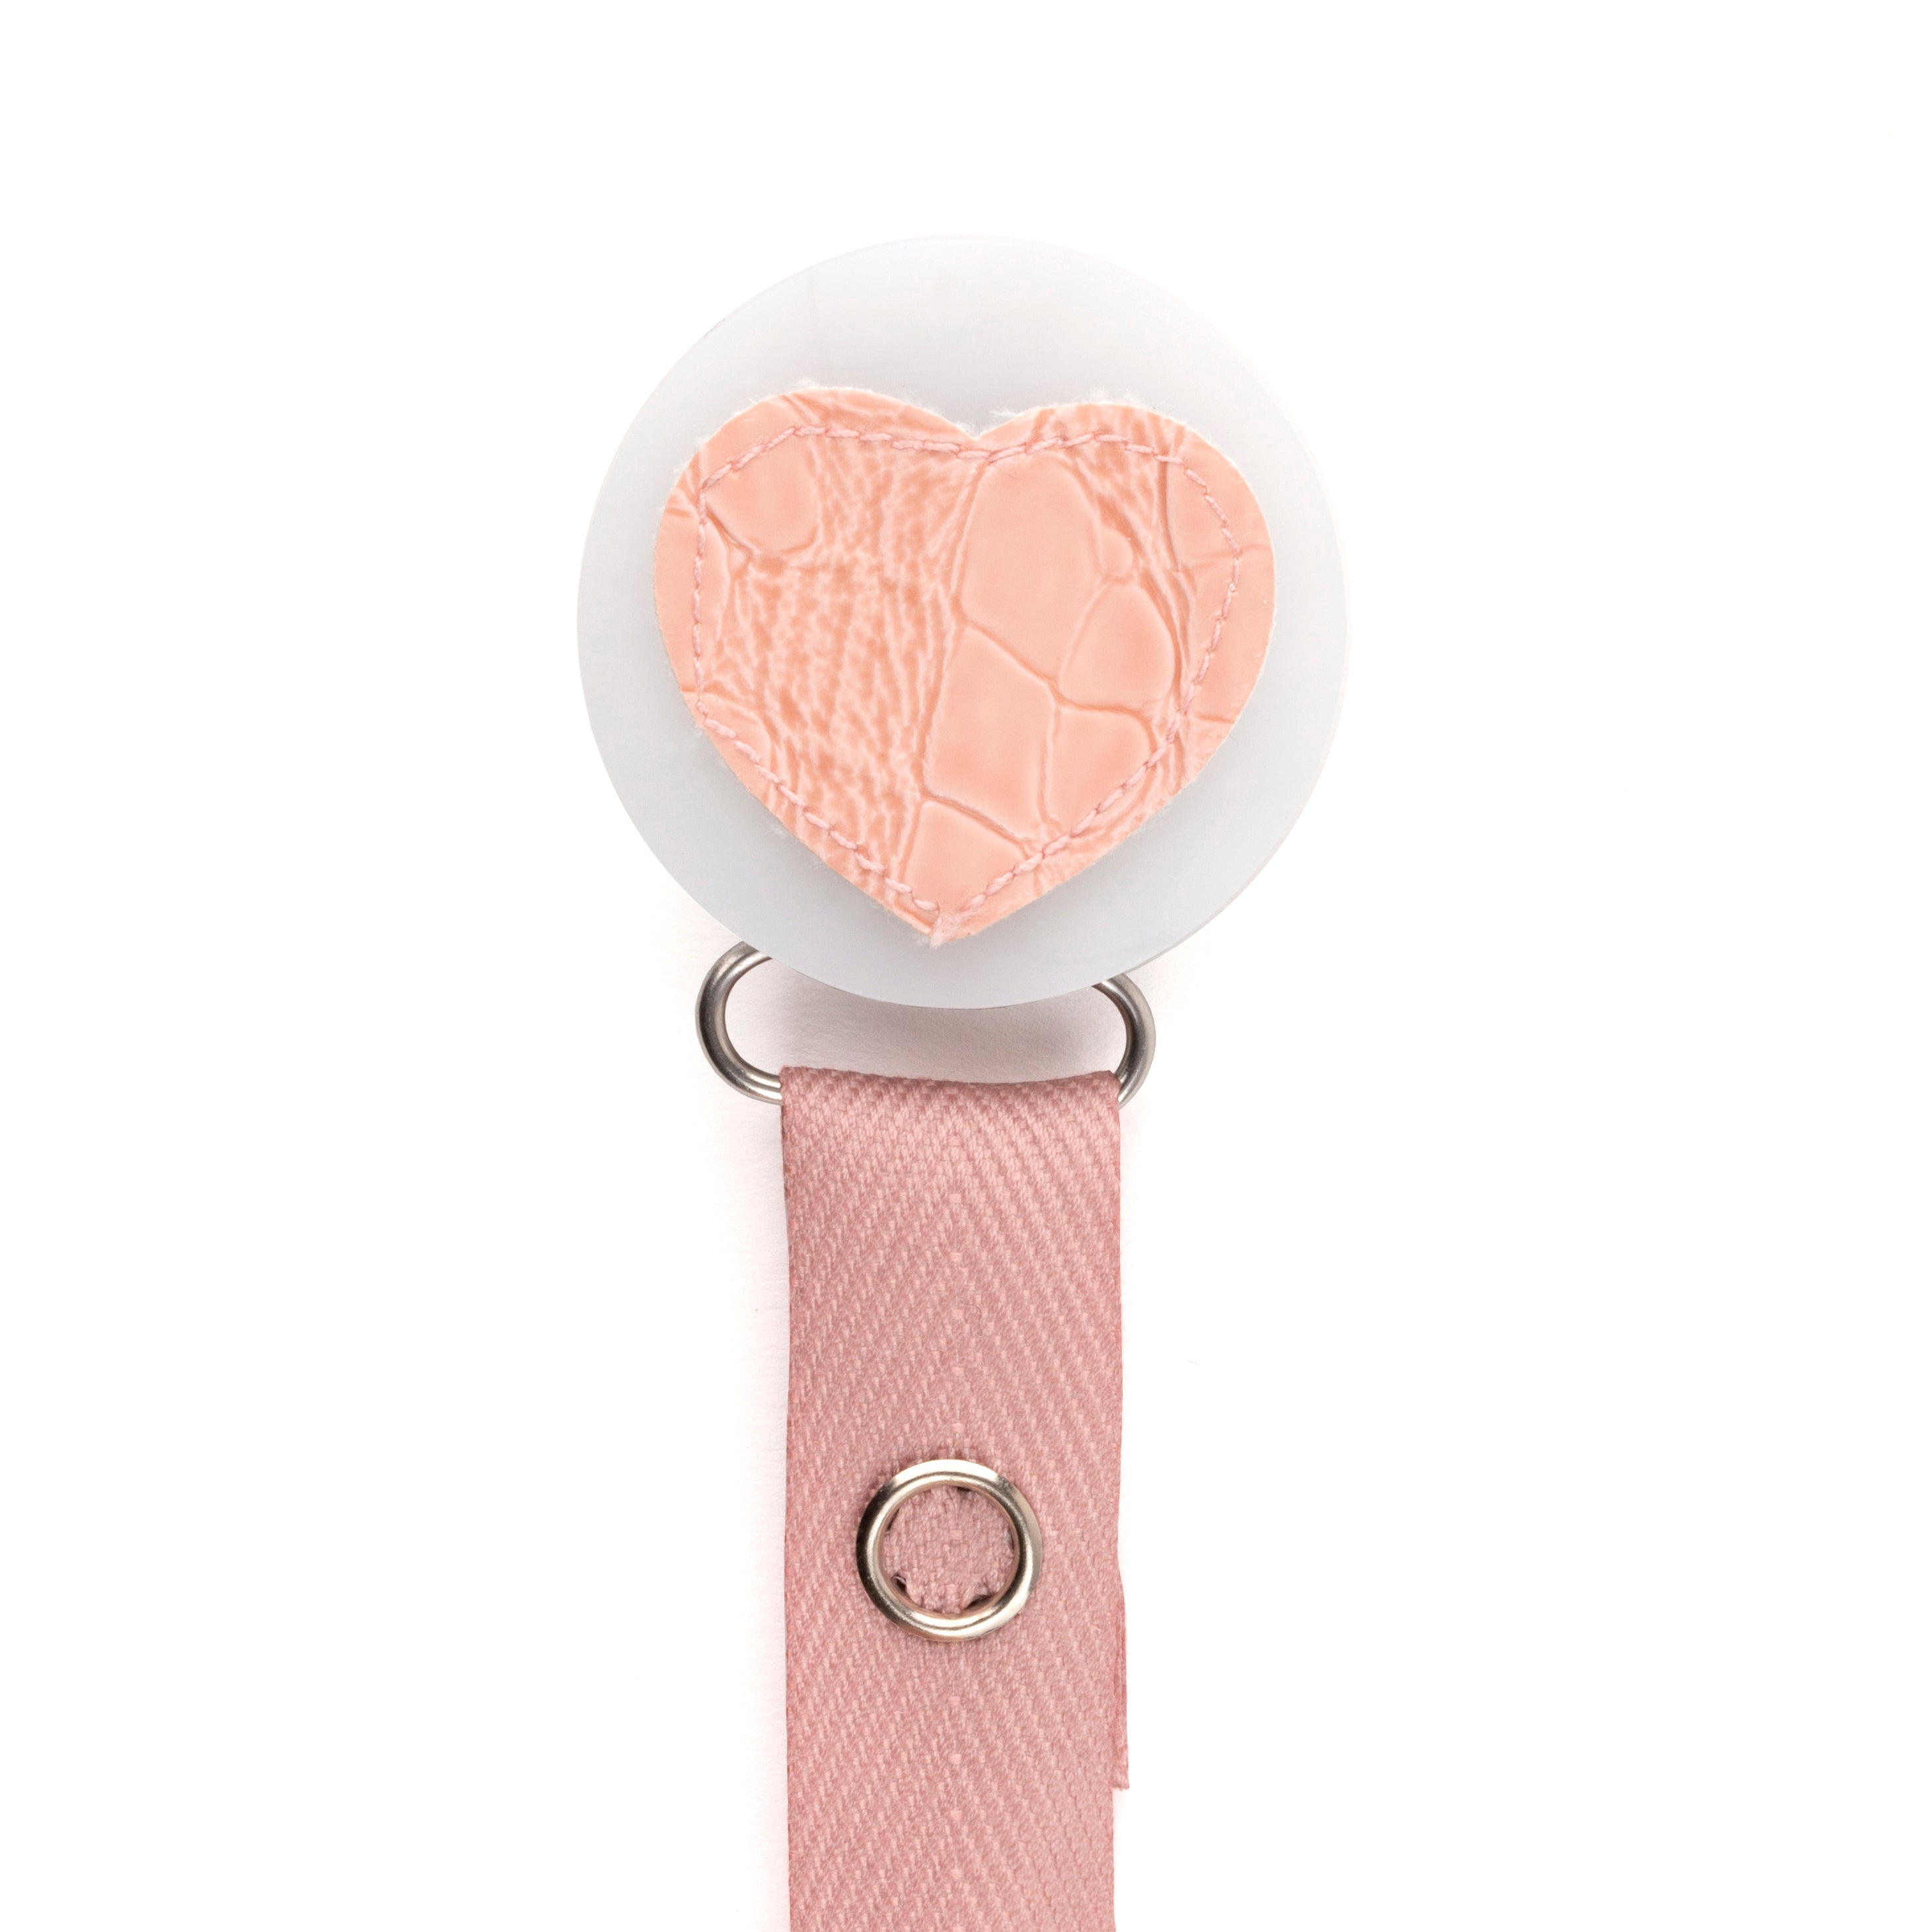 Classy Paci Pink Croc Heart, mauve, peach, pink pacifier clip